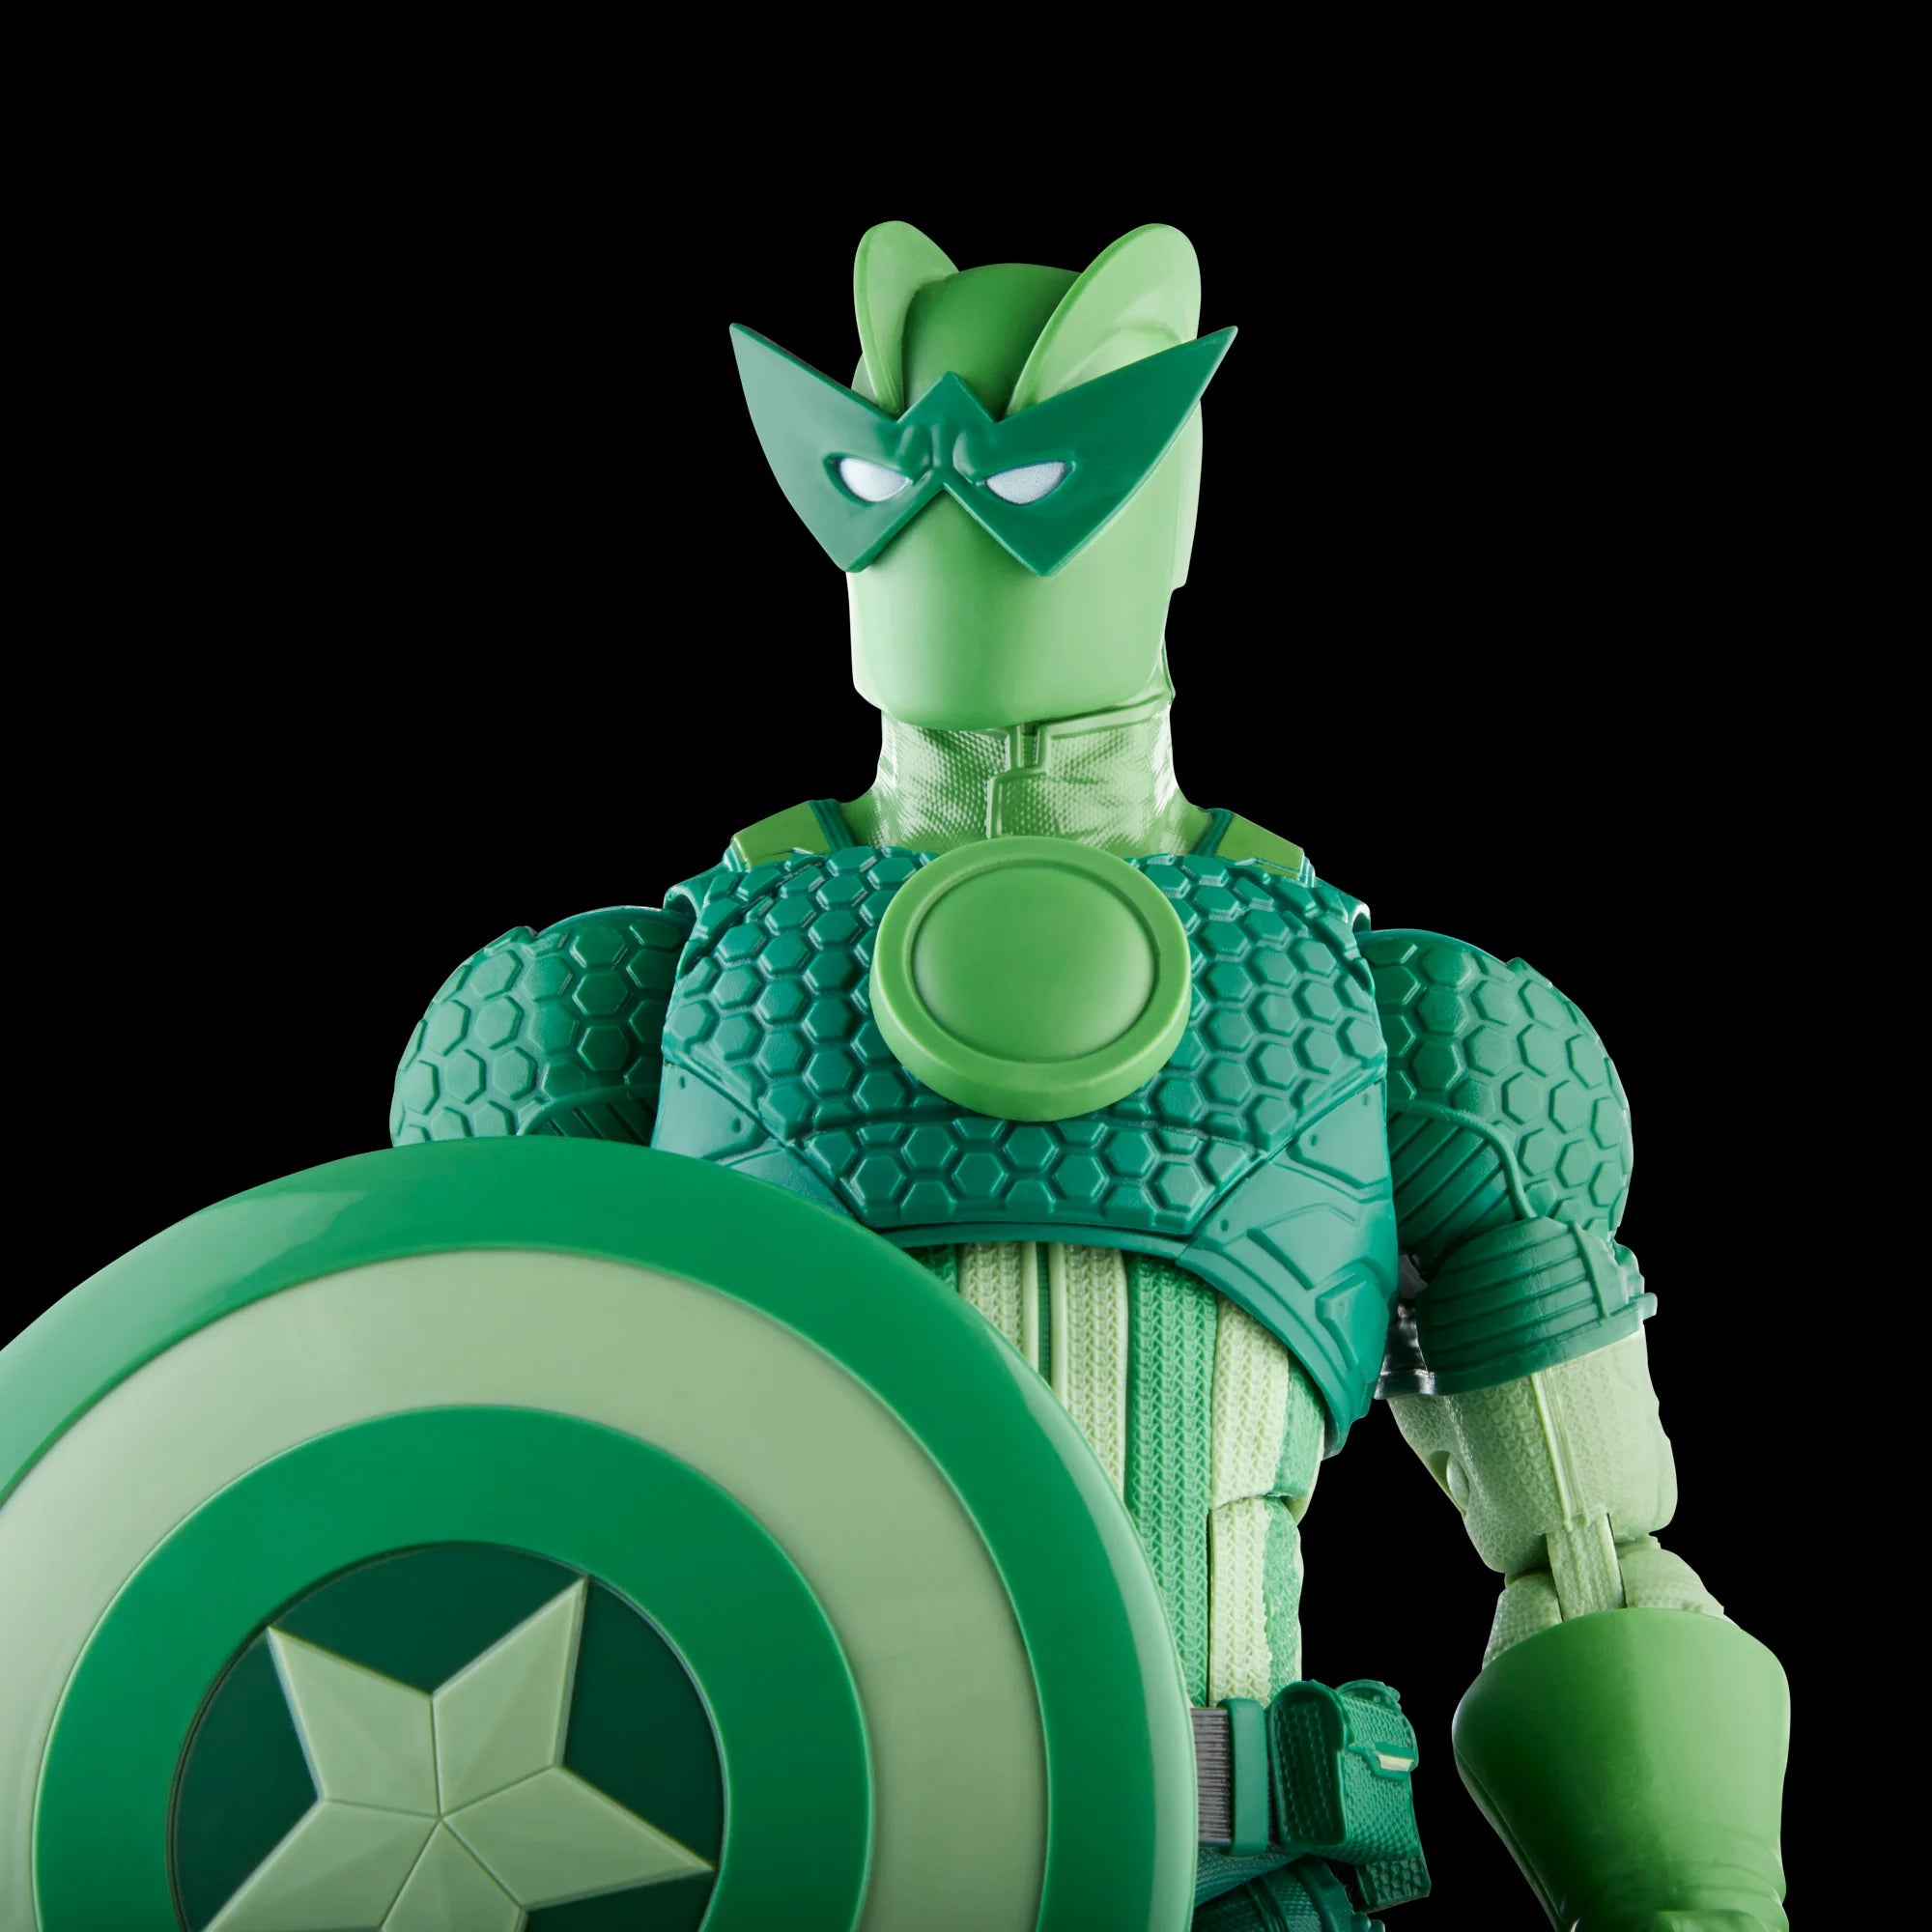 Hasbro - Marvel Legends - Avengers 60th Anniversary - Super Adaptoid